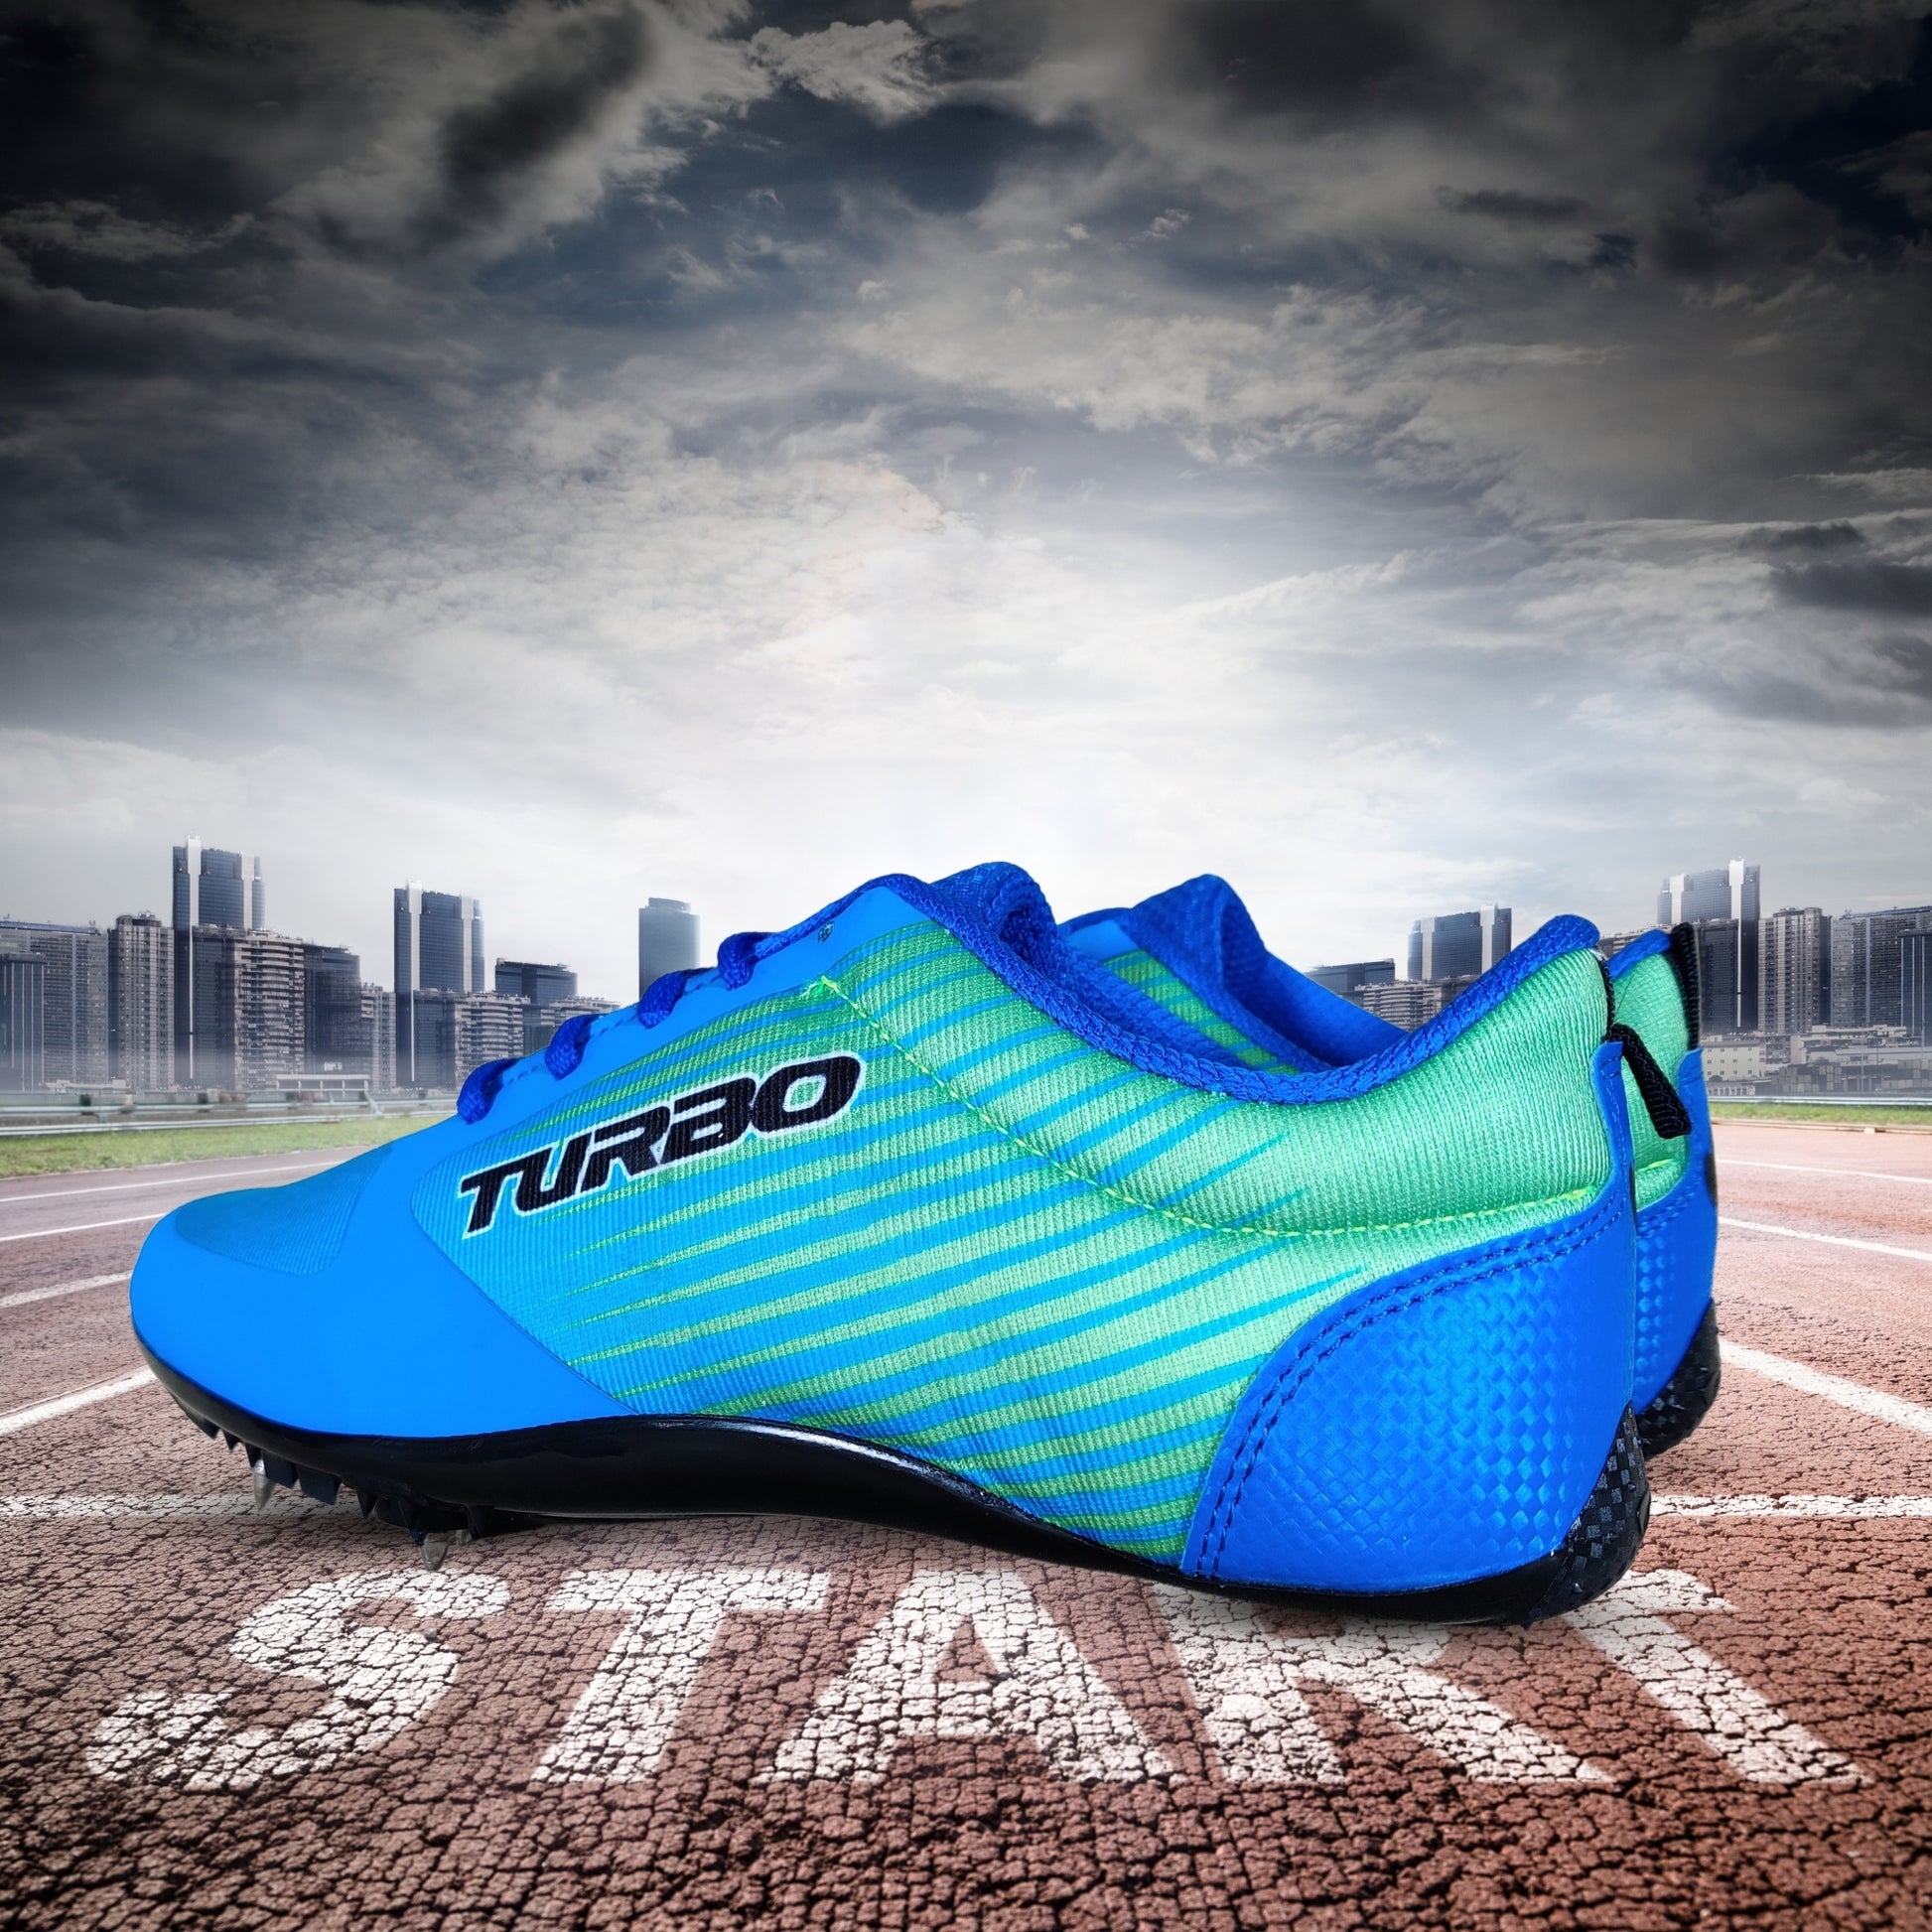 Prokick Turbo Running Spike Shoes - Best Price online Prokicksports.com